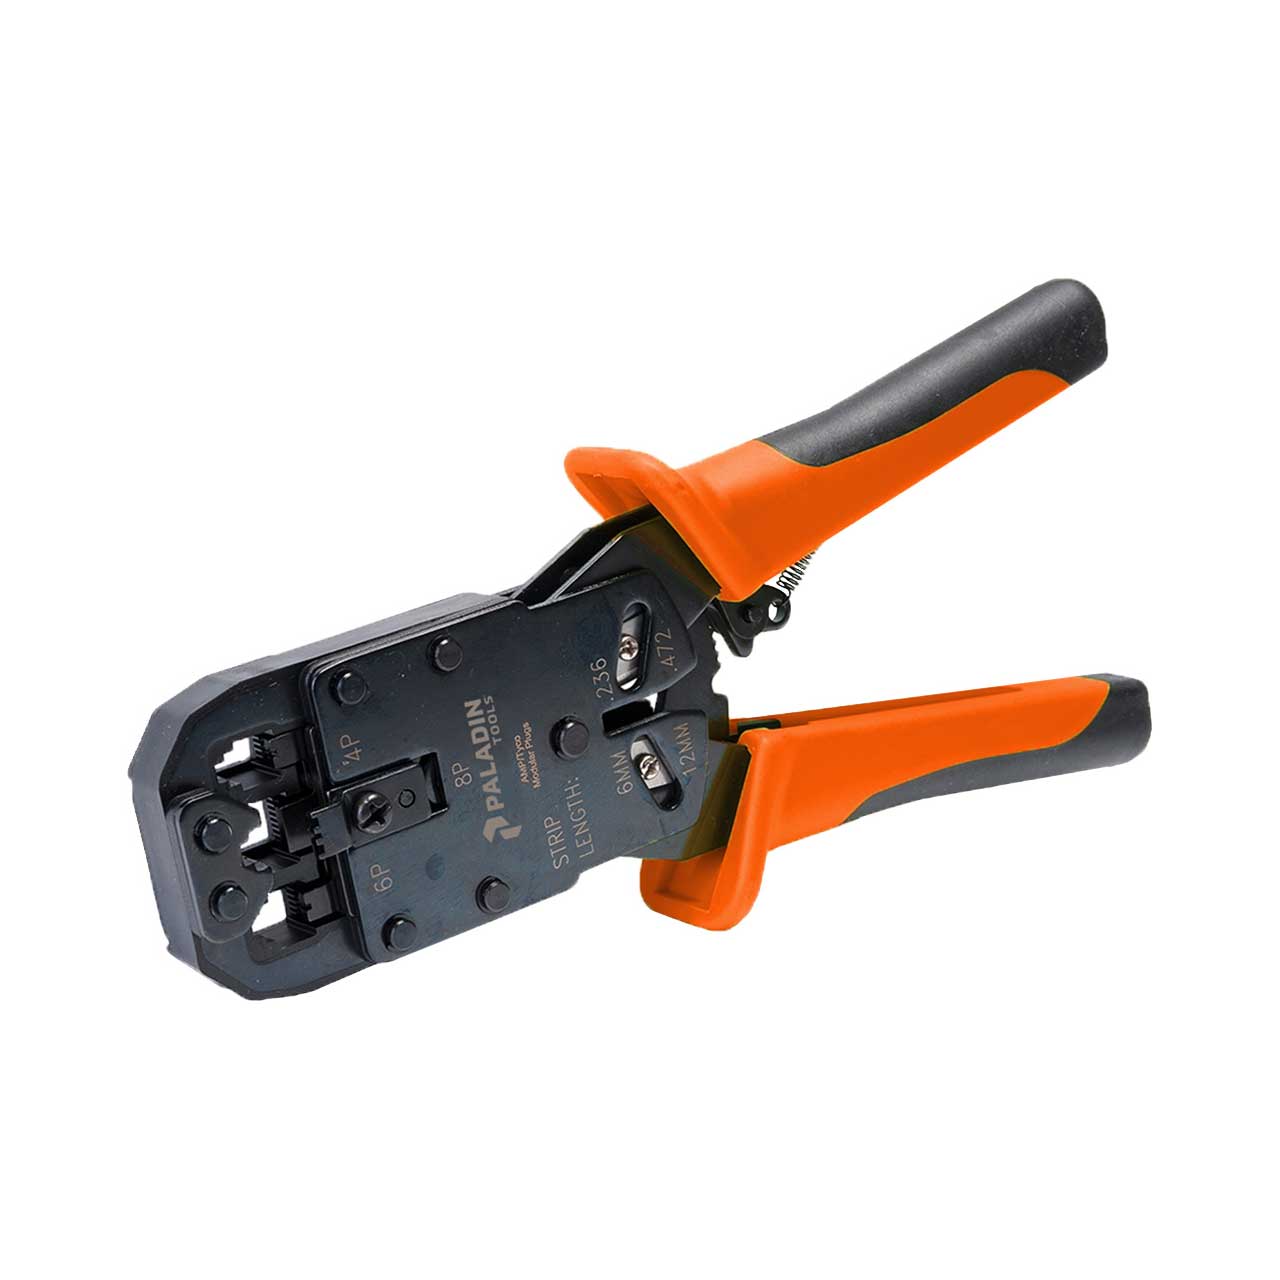 RJ45 Modular Plug Crimper Cut and Strip Cable Tool